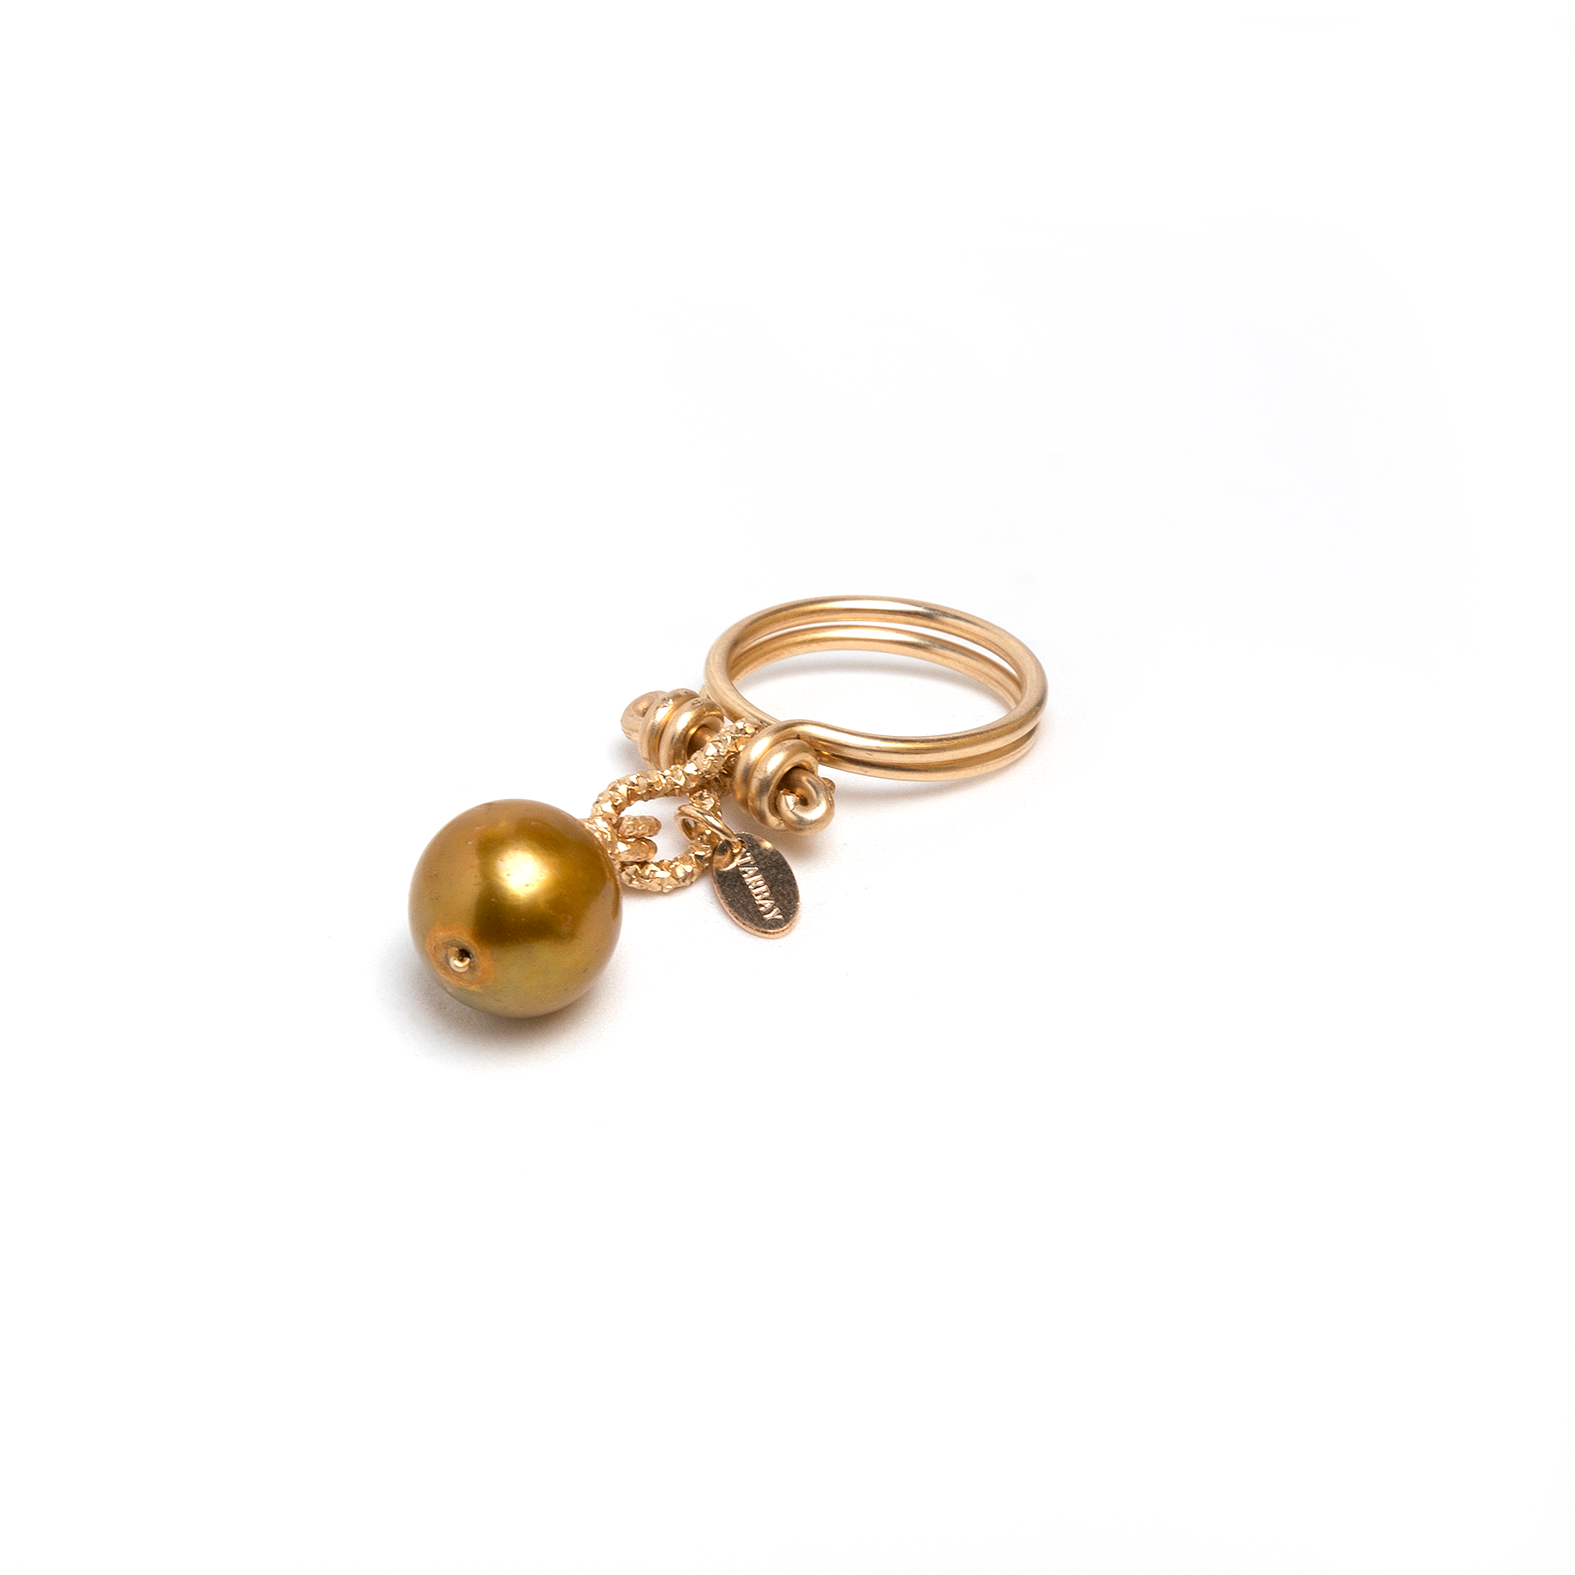 Gyros Ring - Bronze Pearl Rings TARBAY   